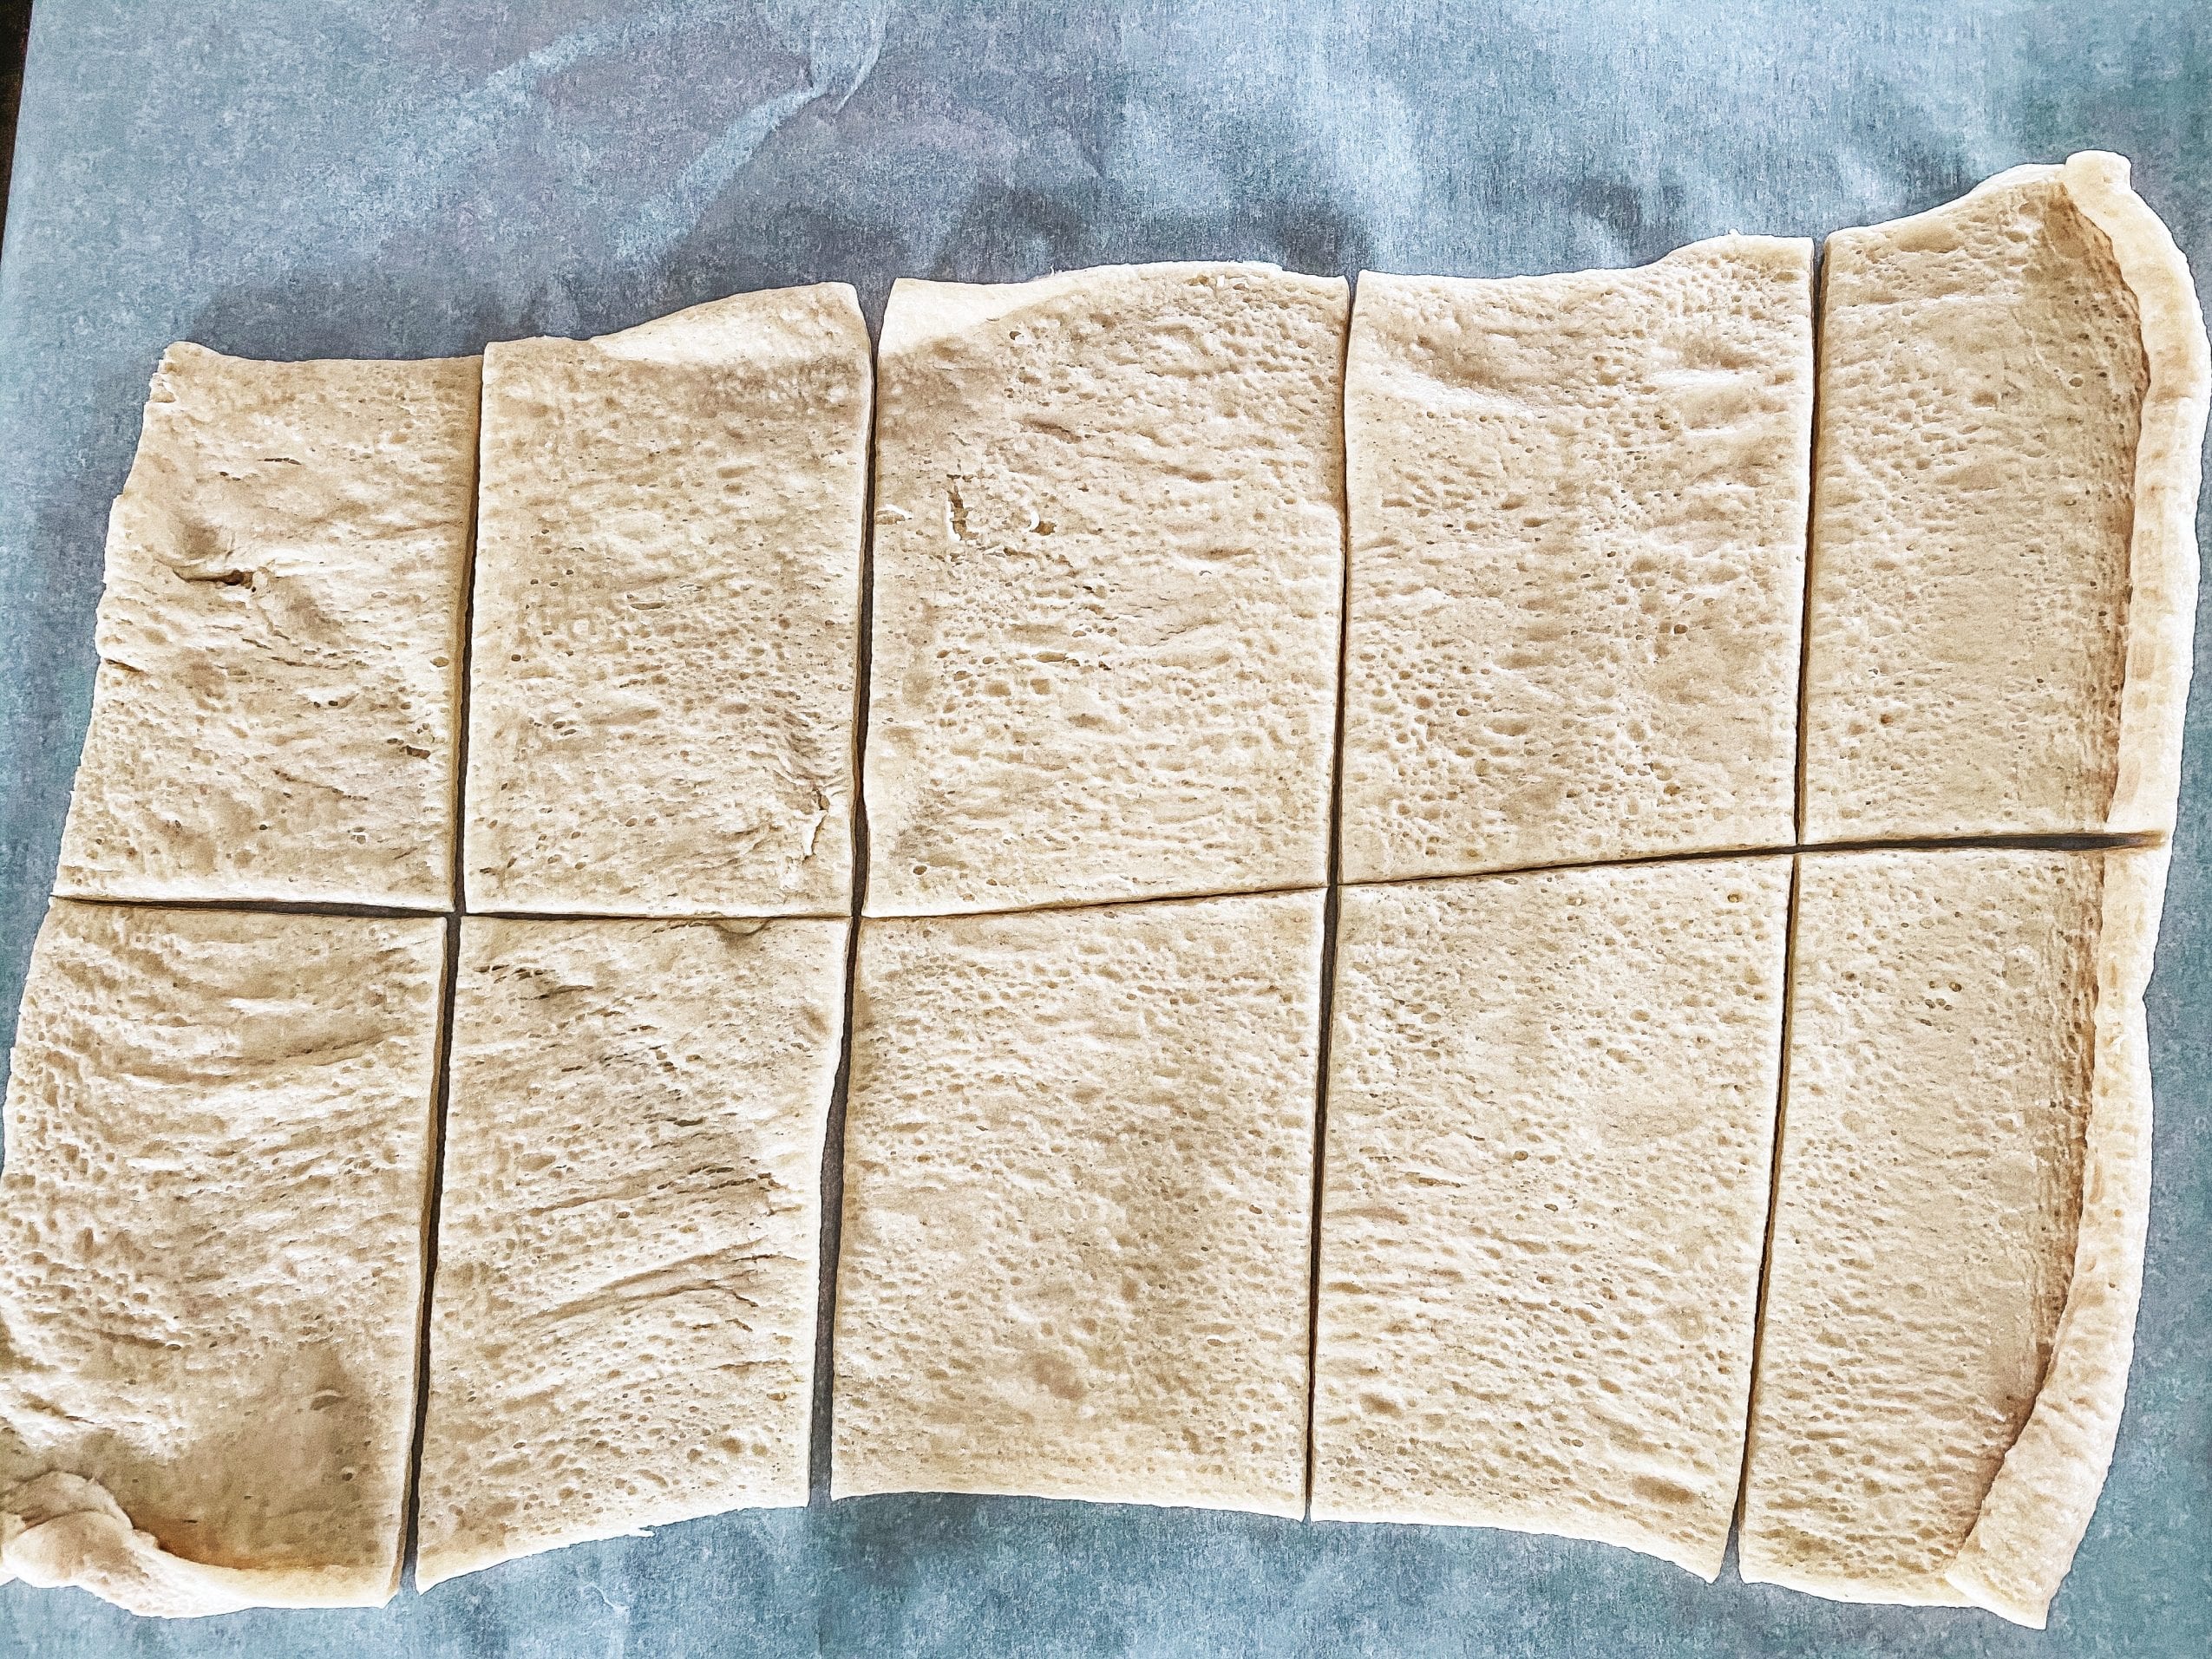 Cutting the Pillsbury Crescent Dough Sheet into squares